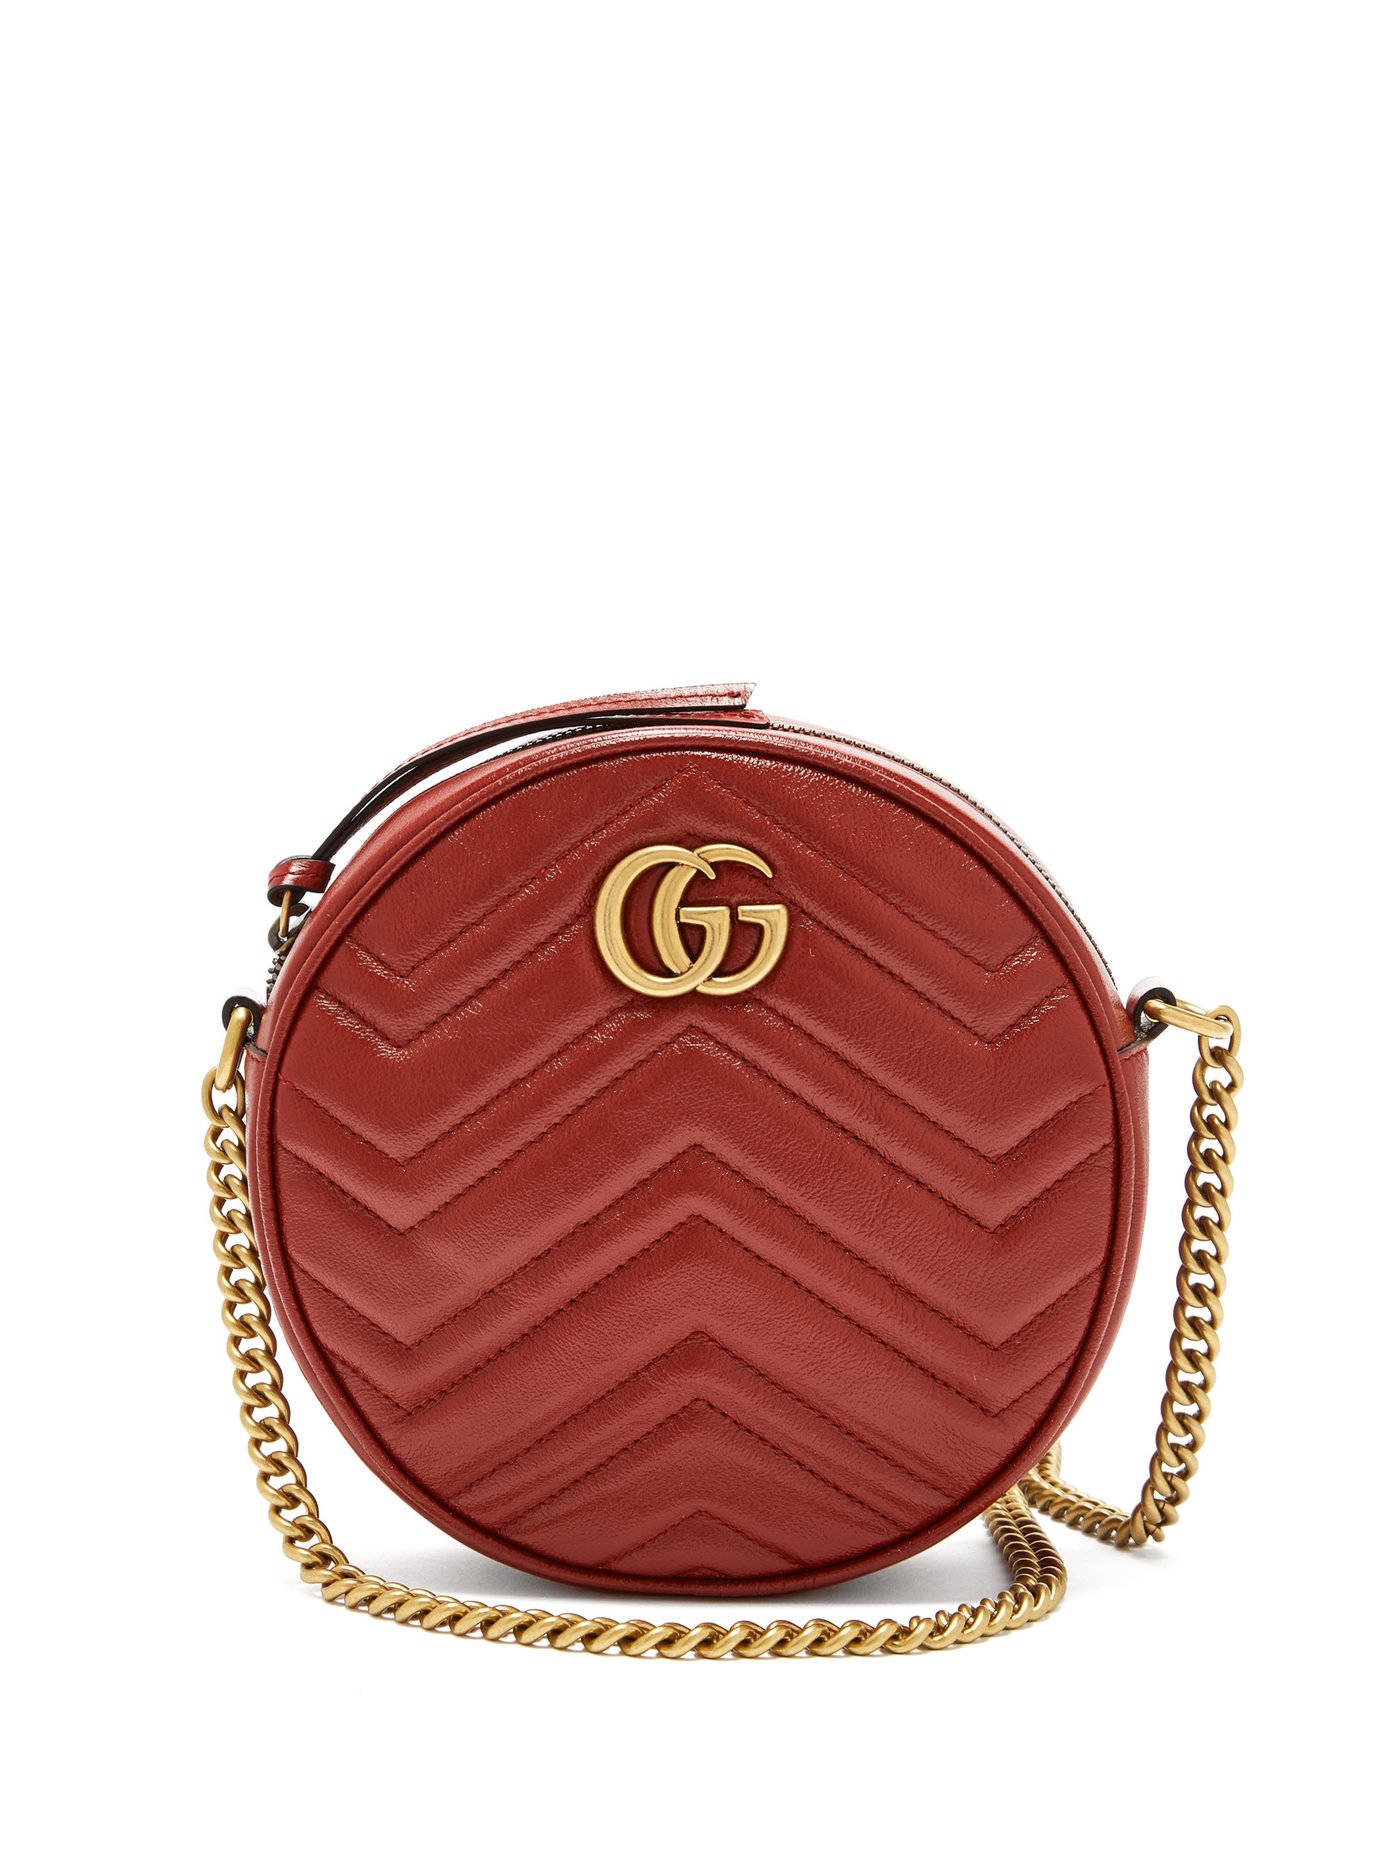 GG Marmont circular leather cross-body 